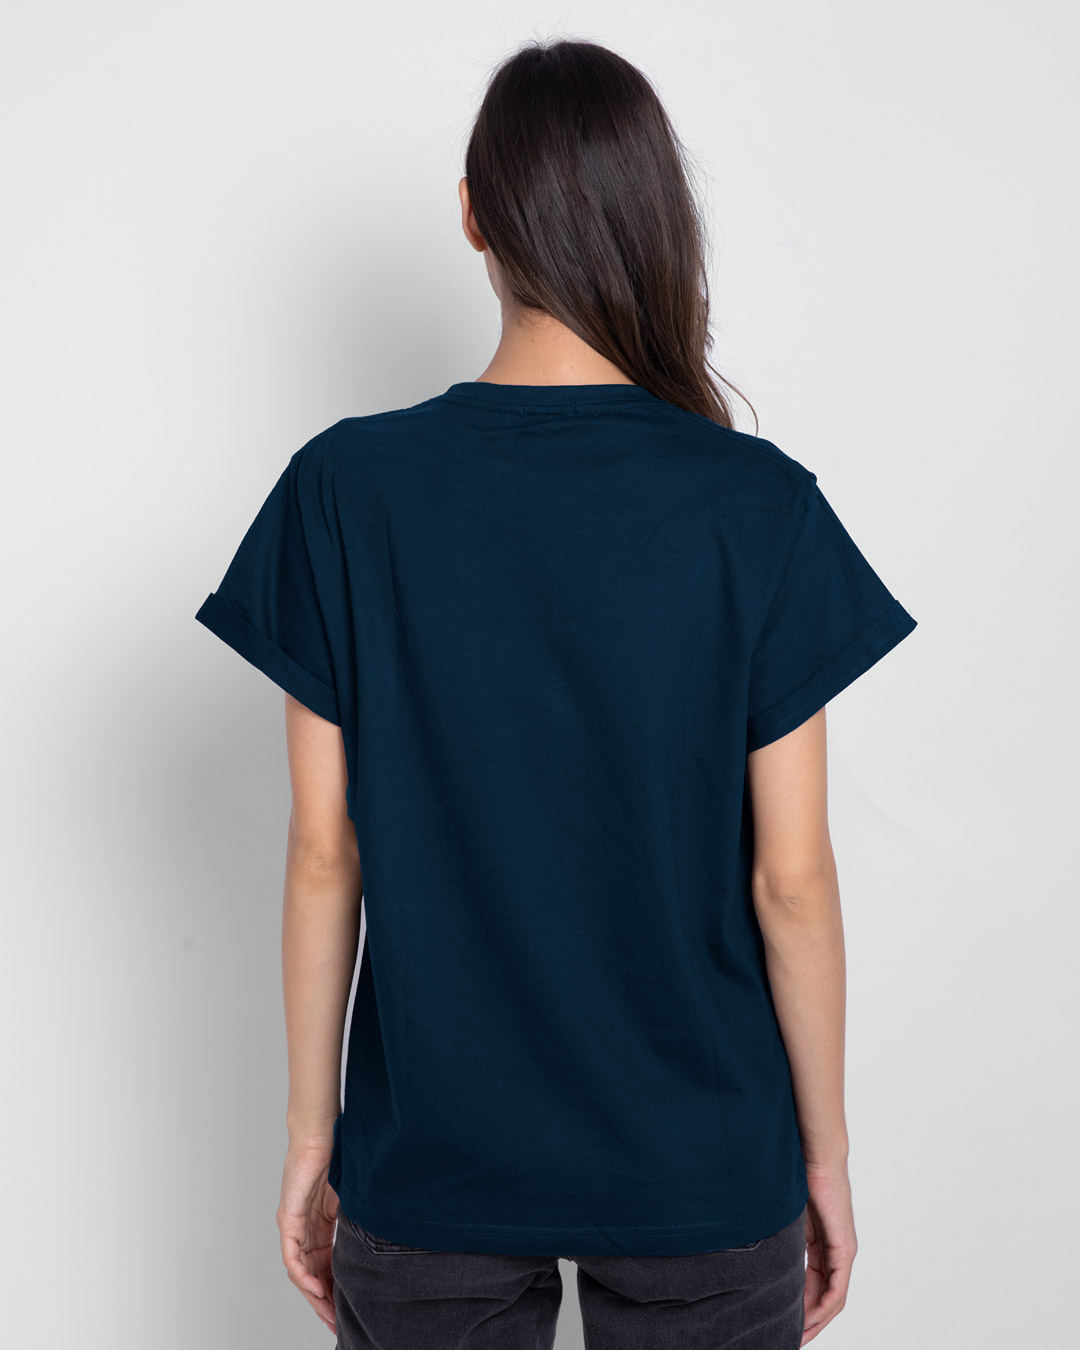 Shop Tri Peace Boyfriend T-Shirt Navy Blue-Back